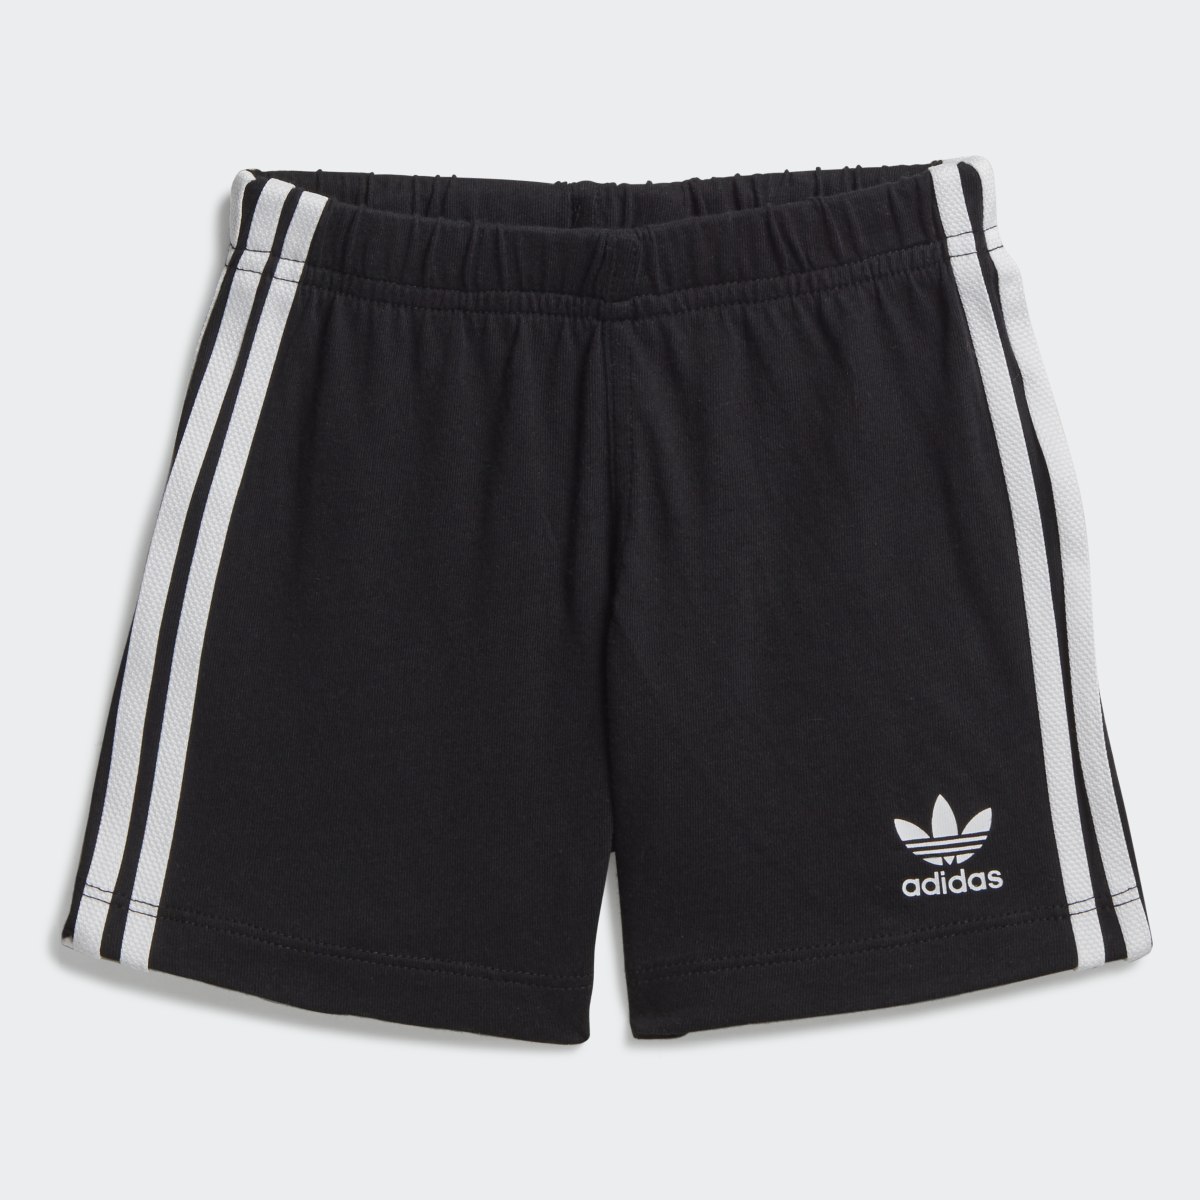 Adidas Trefoil Shorts und T-Shirt Set. 5